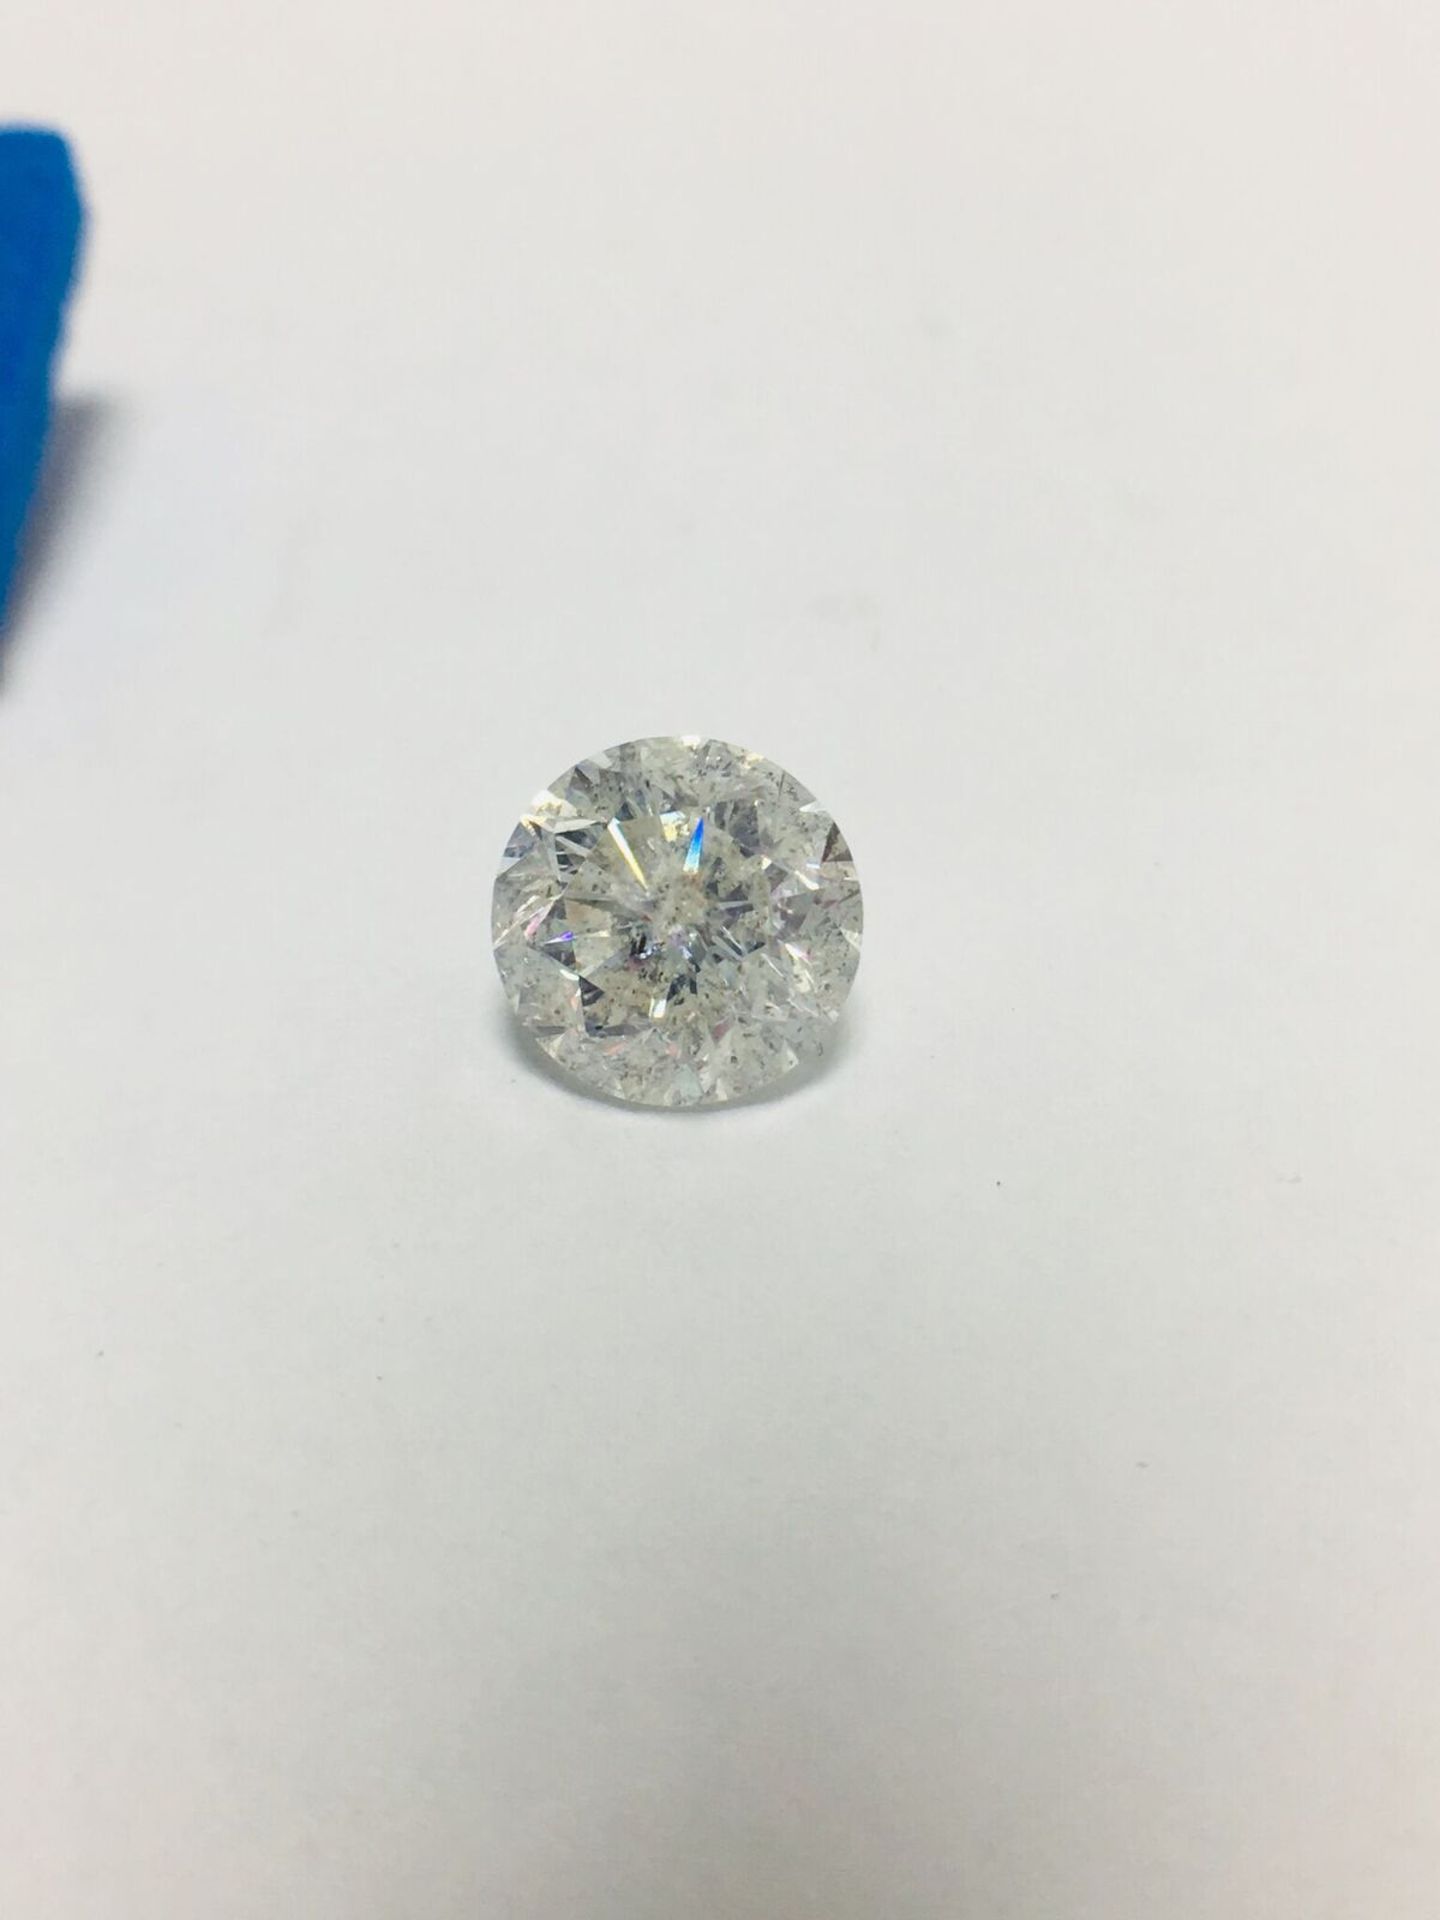 2.01Ct Round Brilliant Cut Natural Diamond - Image 3 of 3